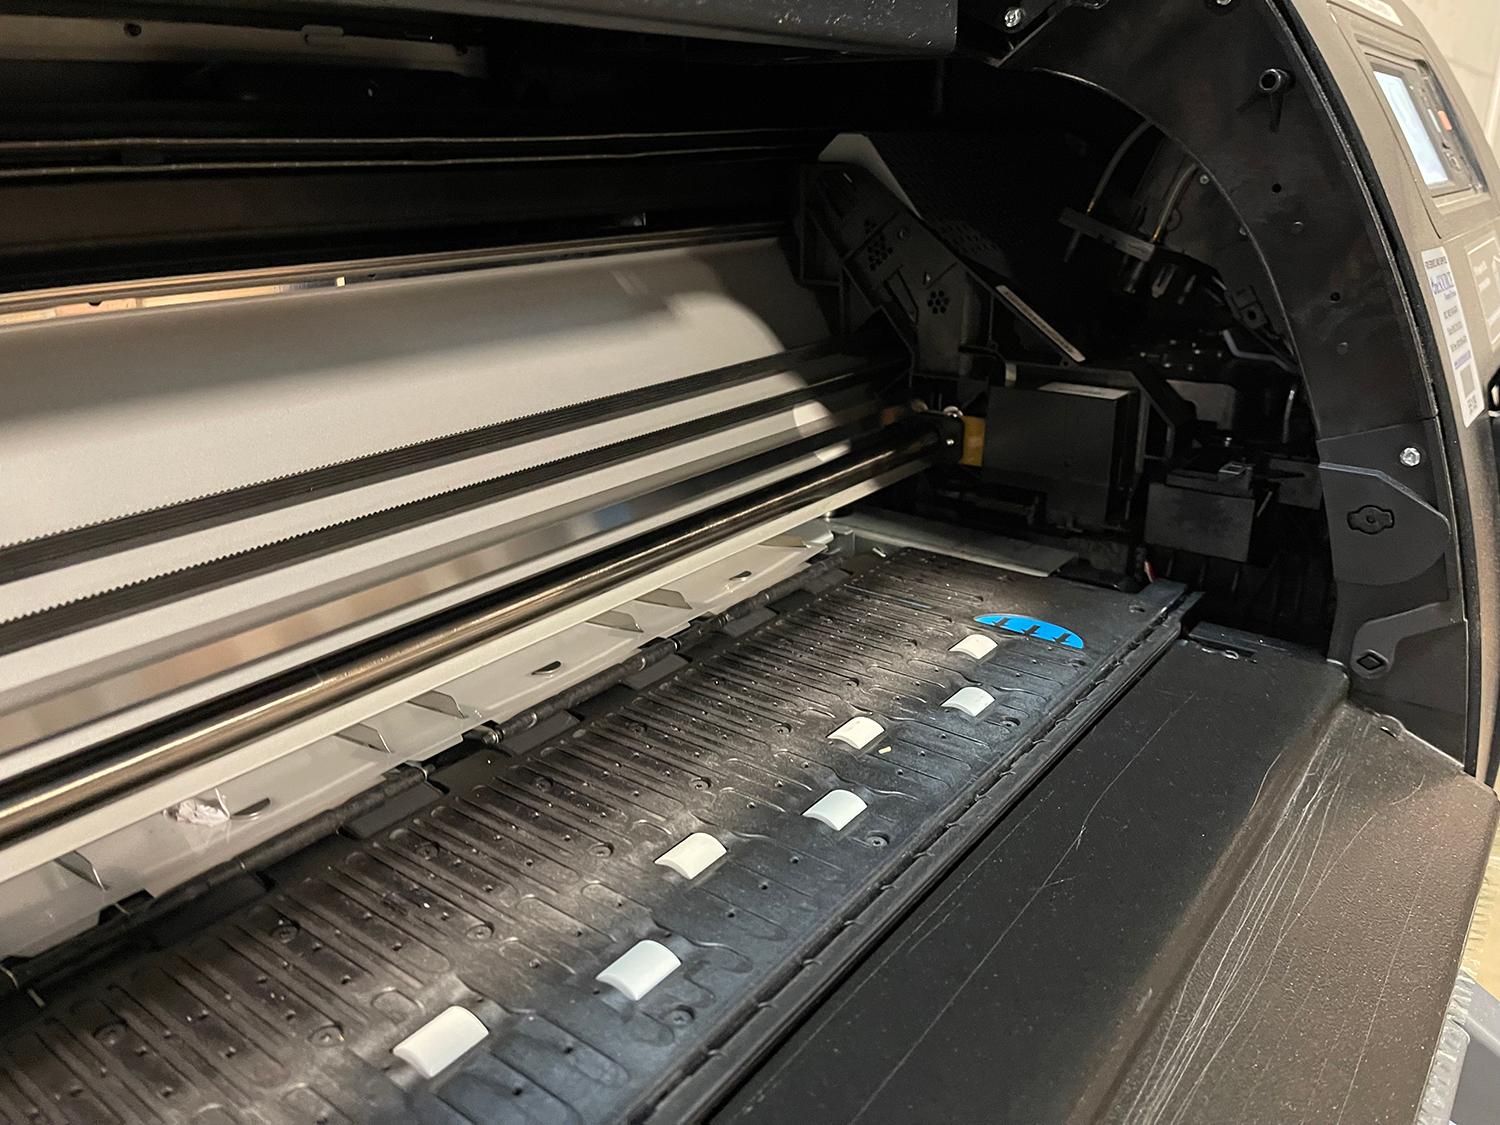 HP Z6600 - 64" photo production printer ulta clean (Dallas, Texas)